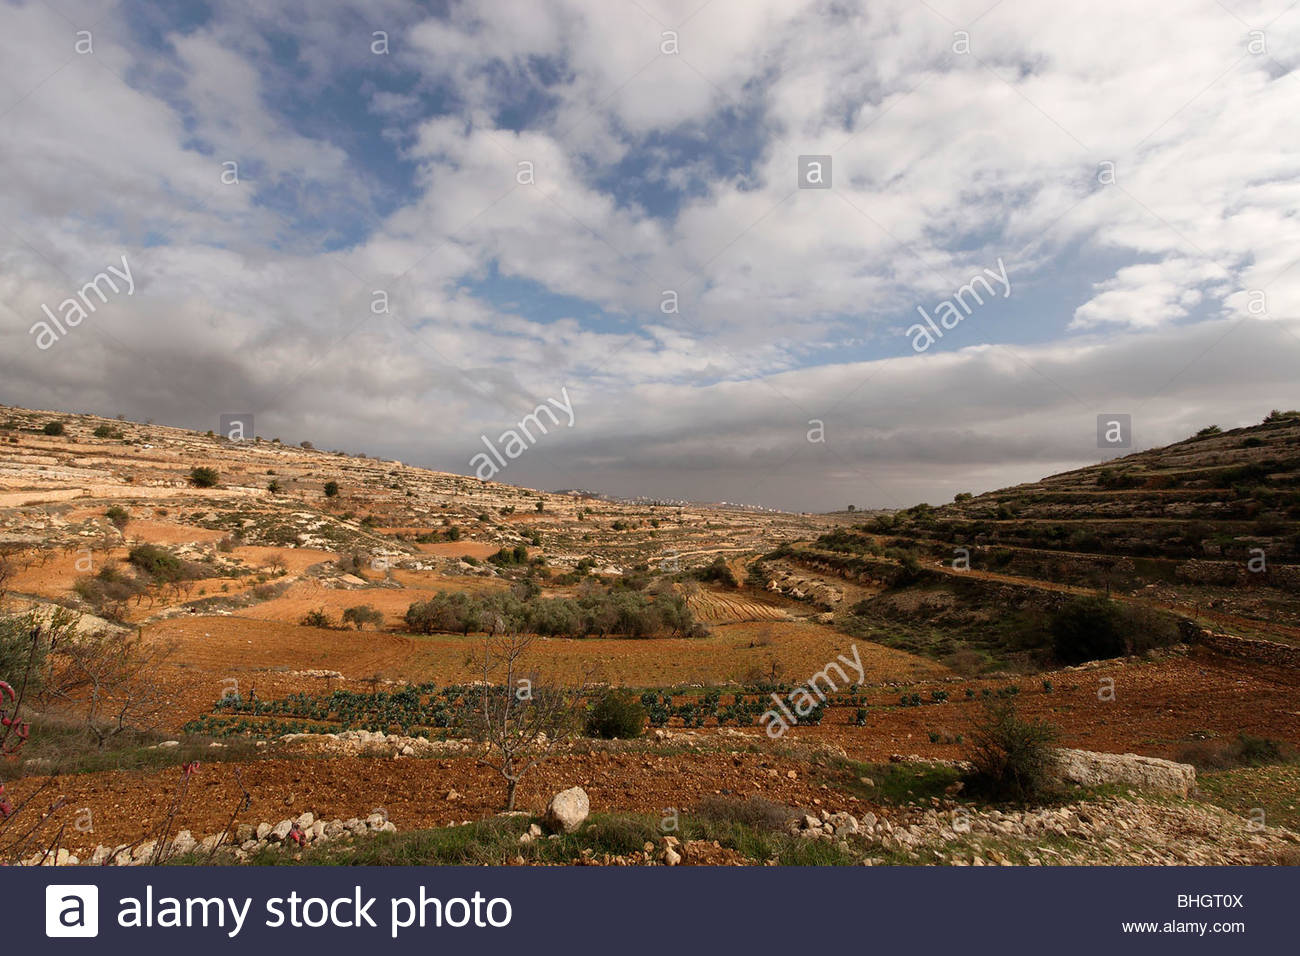 Judea Gush Etzion Looking East From Ein El Kasis Beth Jala Is